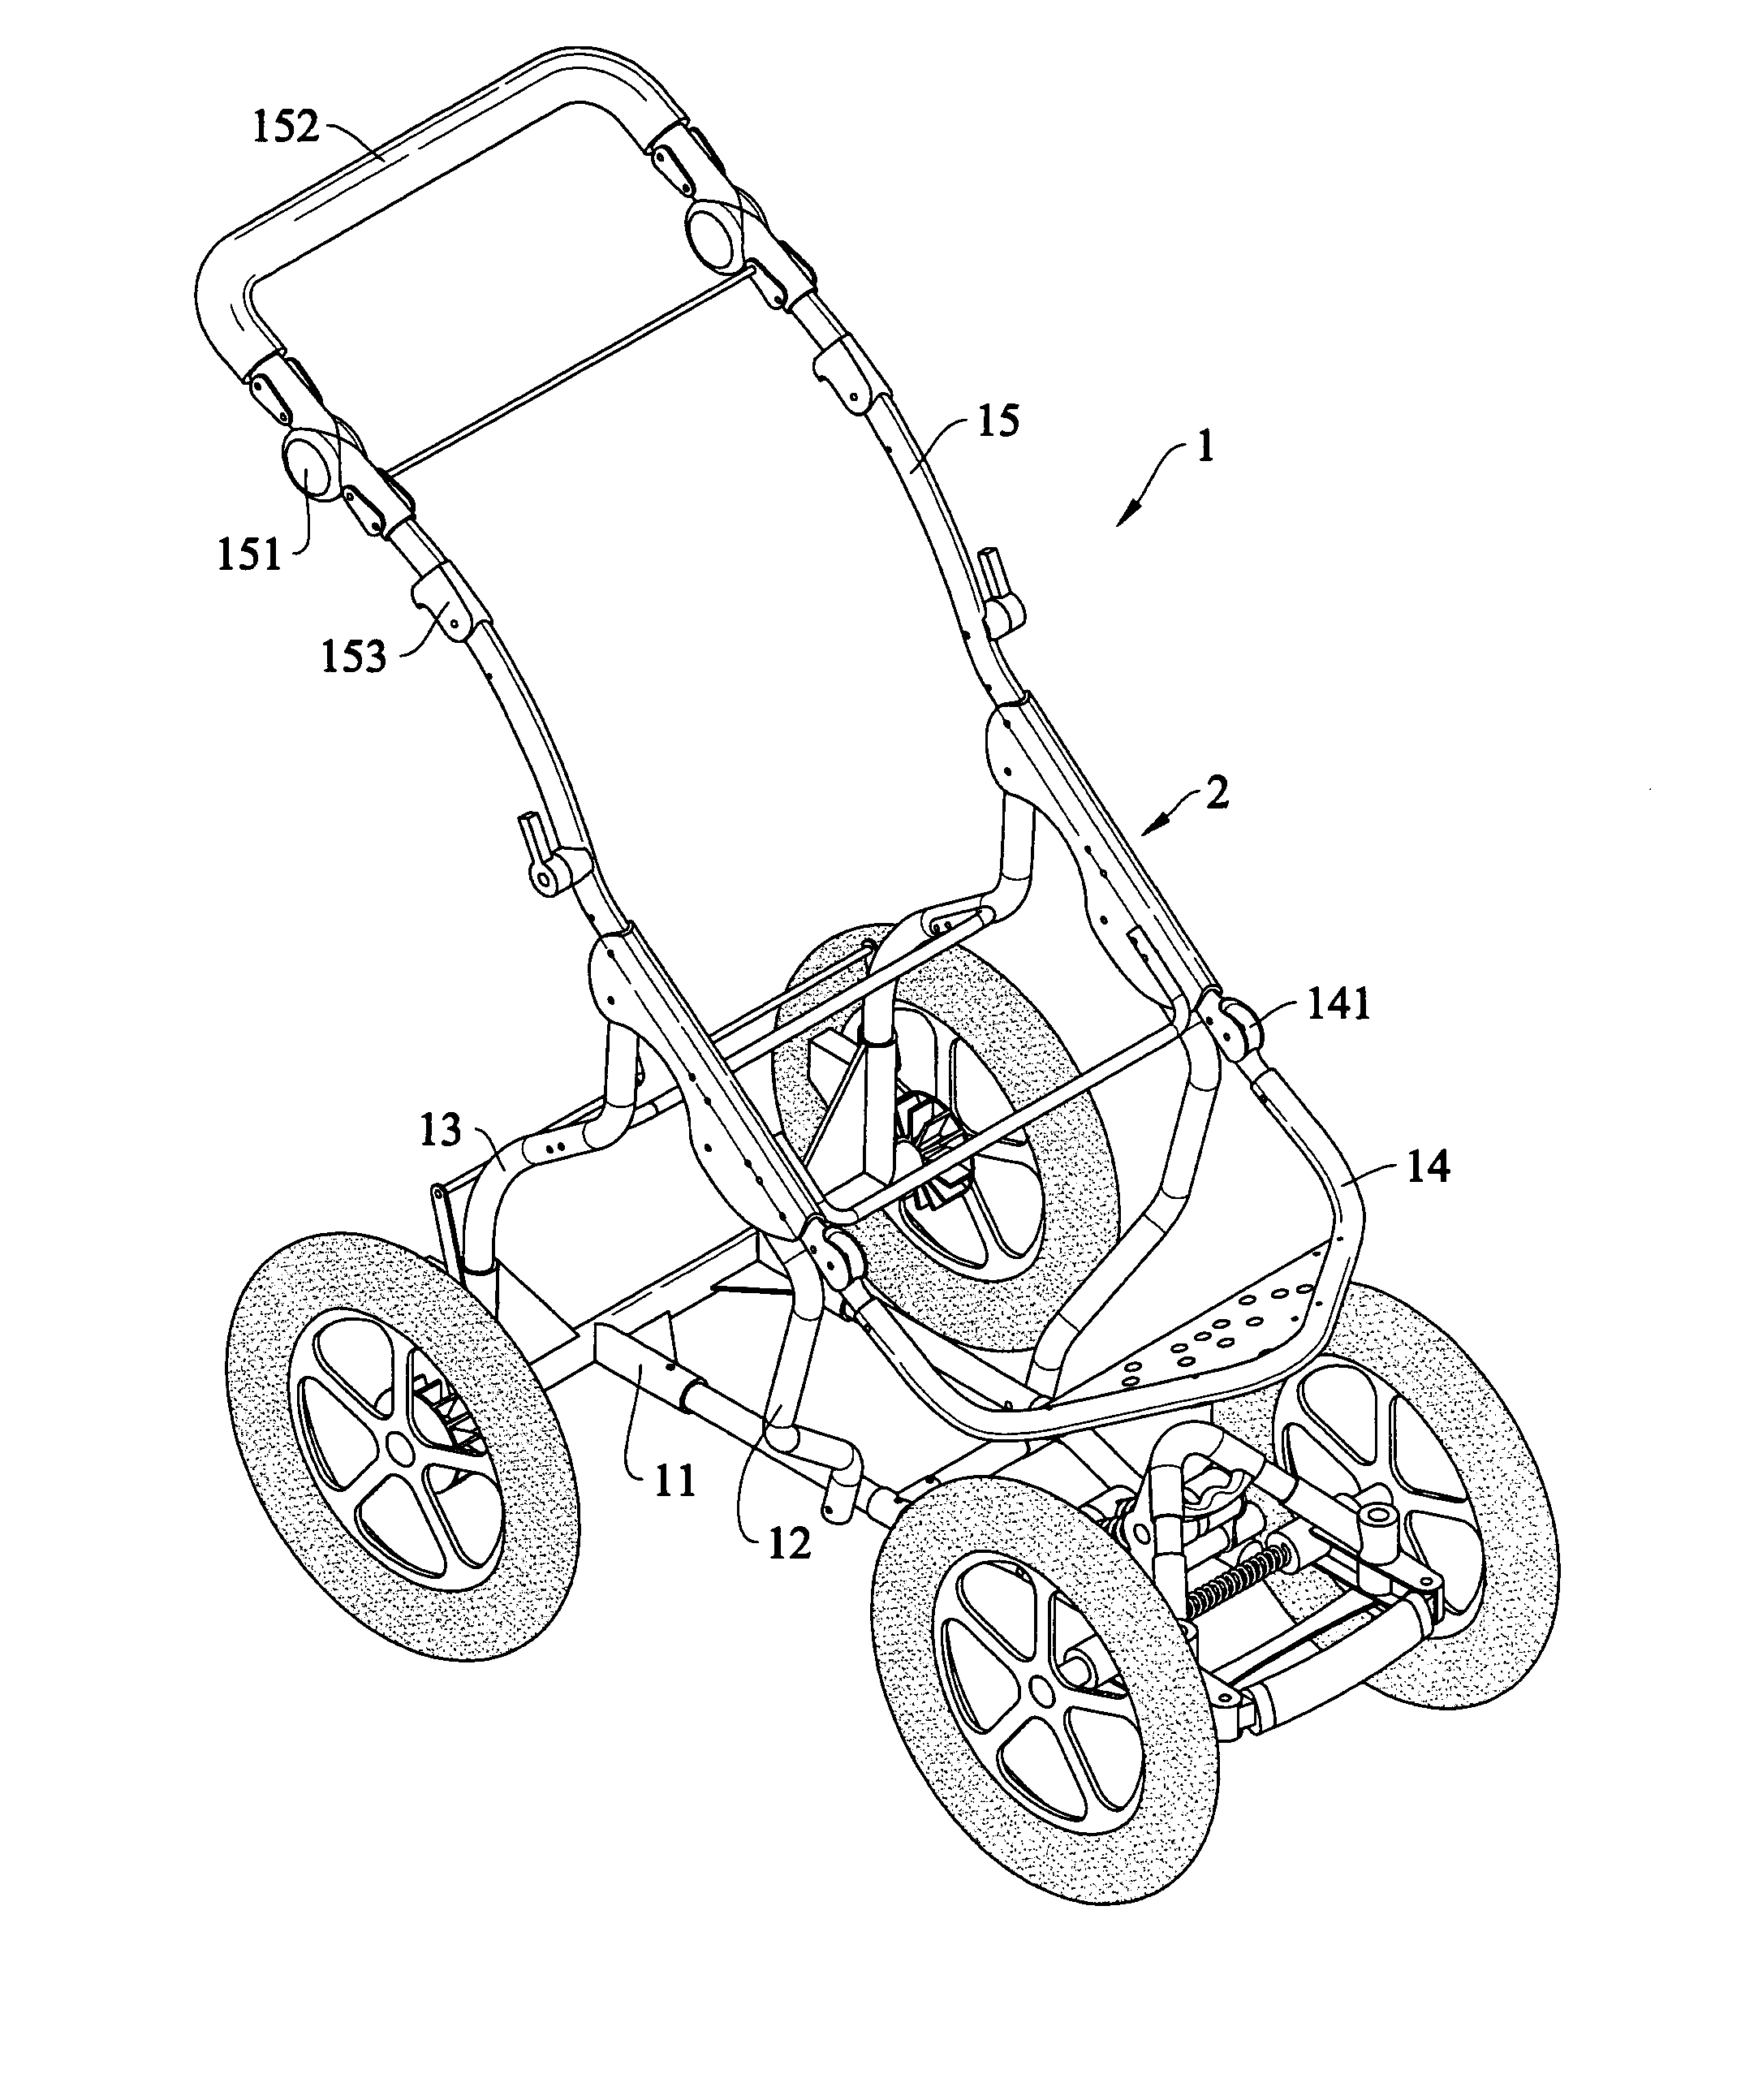 Stroller having a folding device